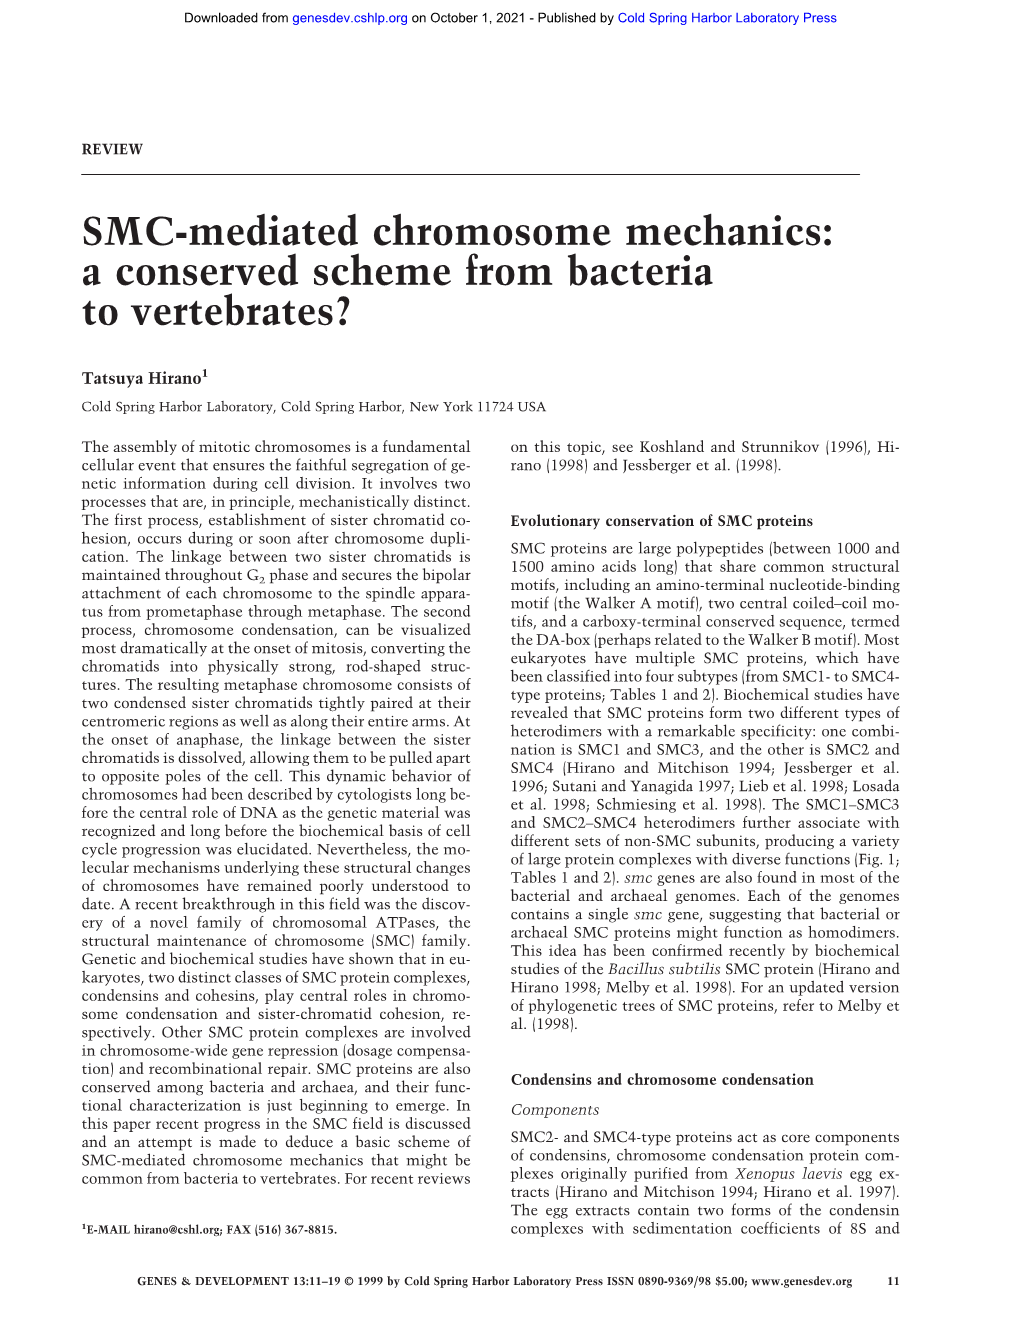 SMC-Mediated Chromosome Mechanics: a Conserved Scheme from Bacteria to Vertebrates?